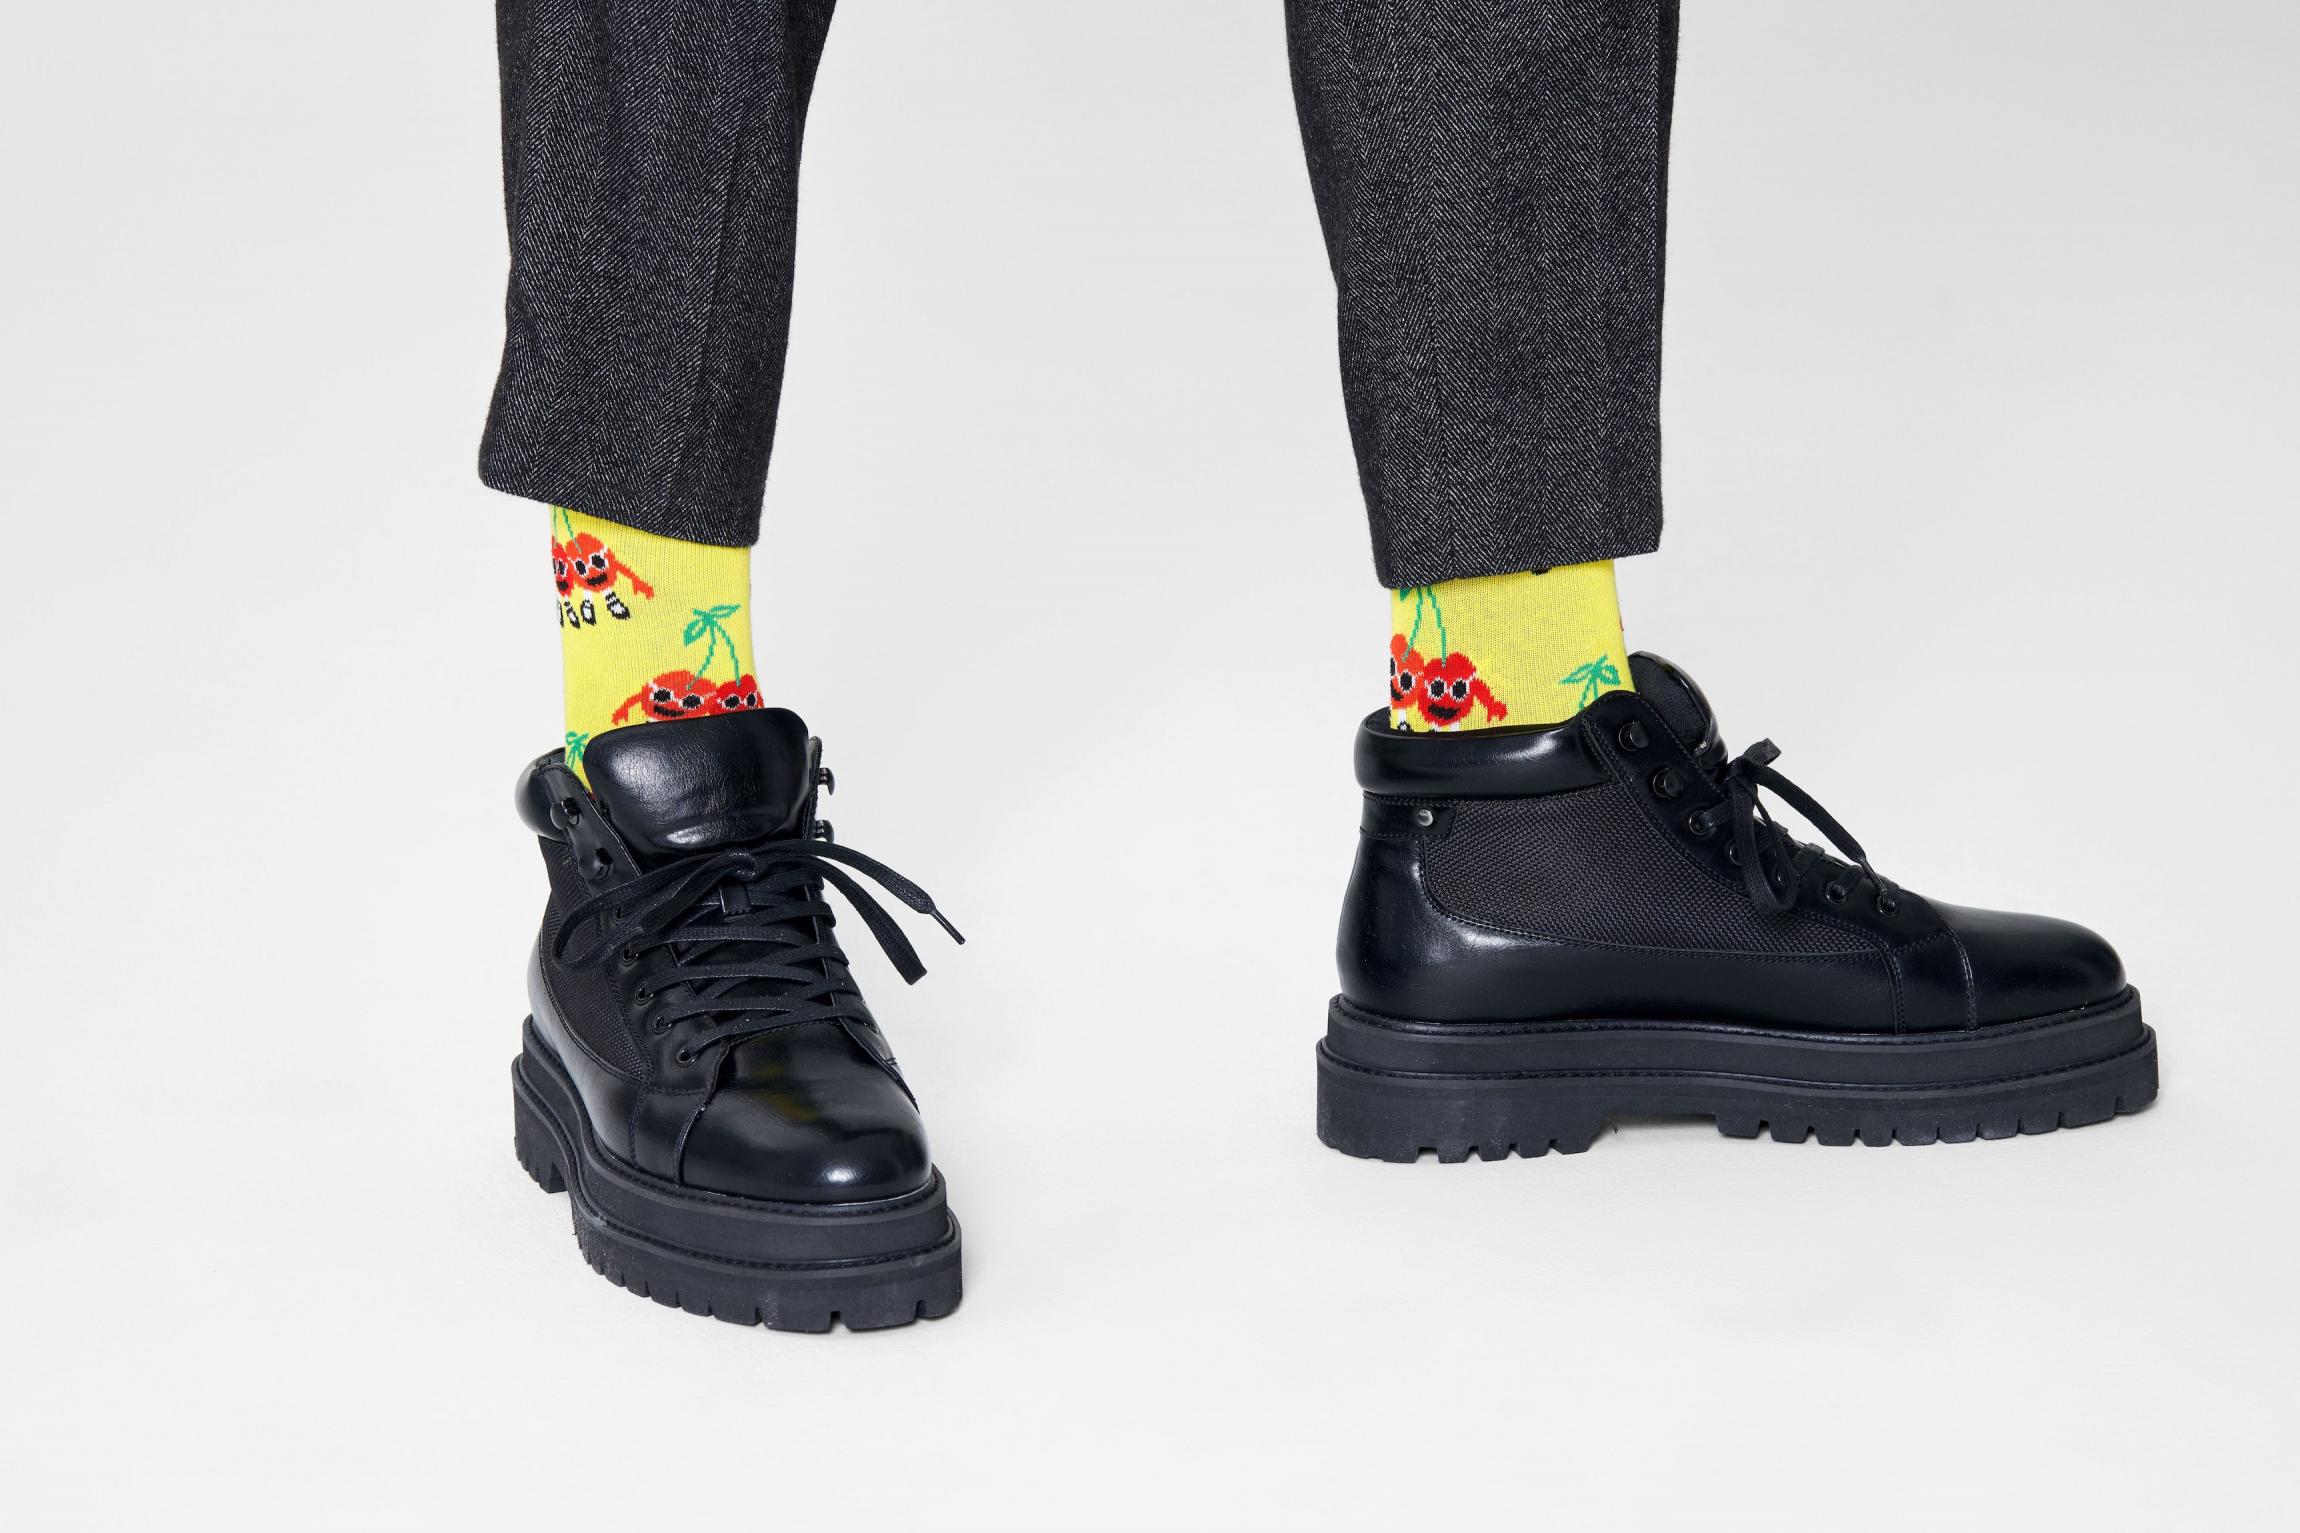 Žluté ponožky Happy Socks s třešněmi, vzor Cherry Mates